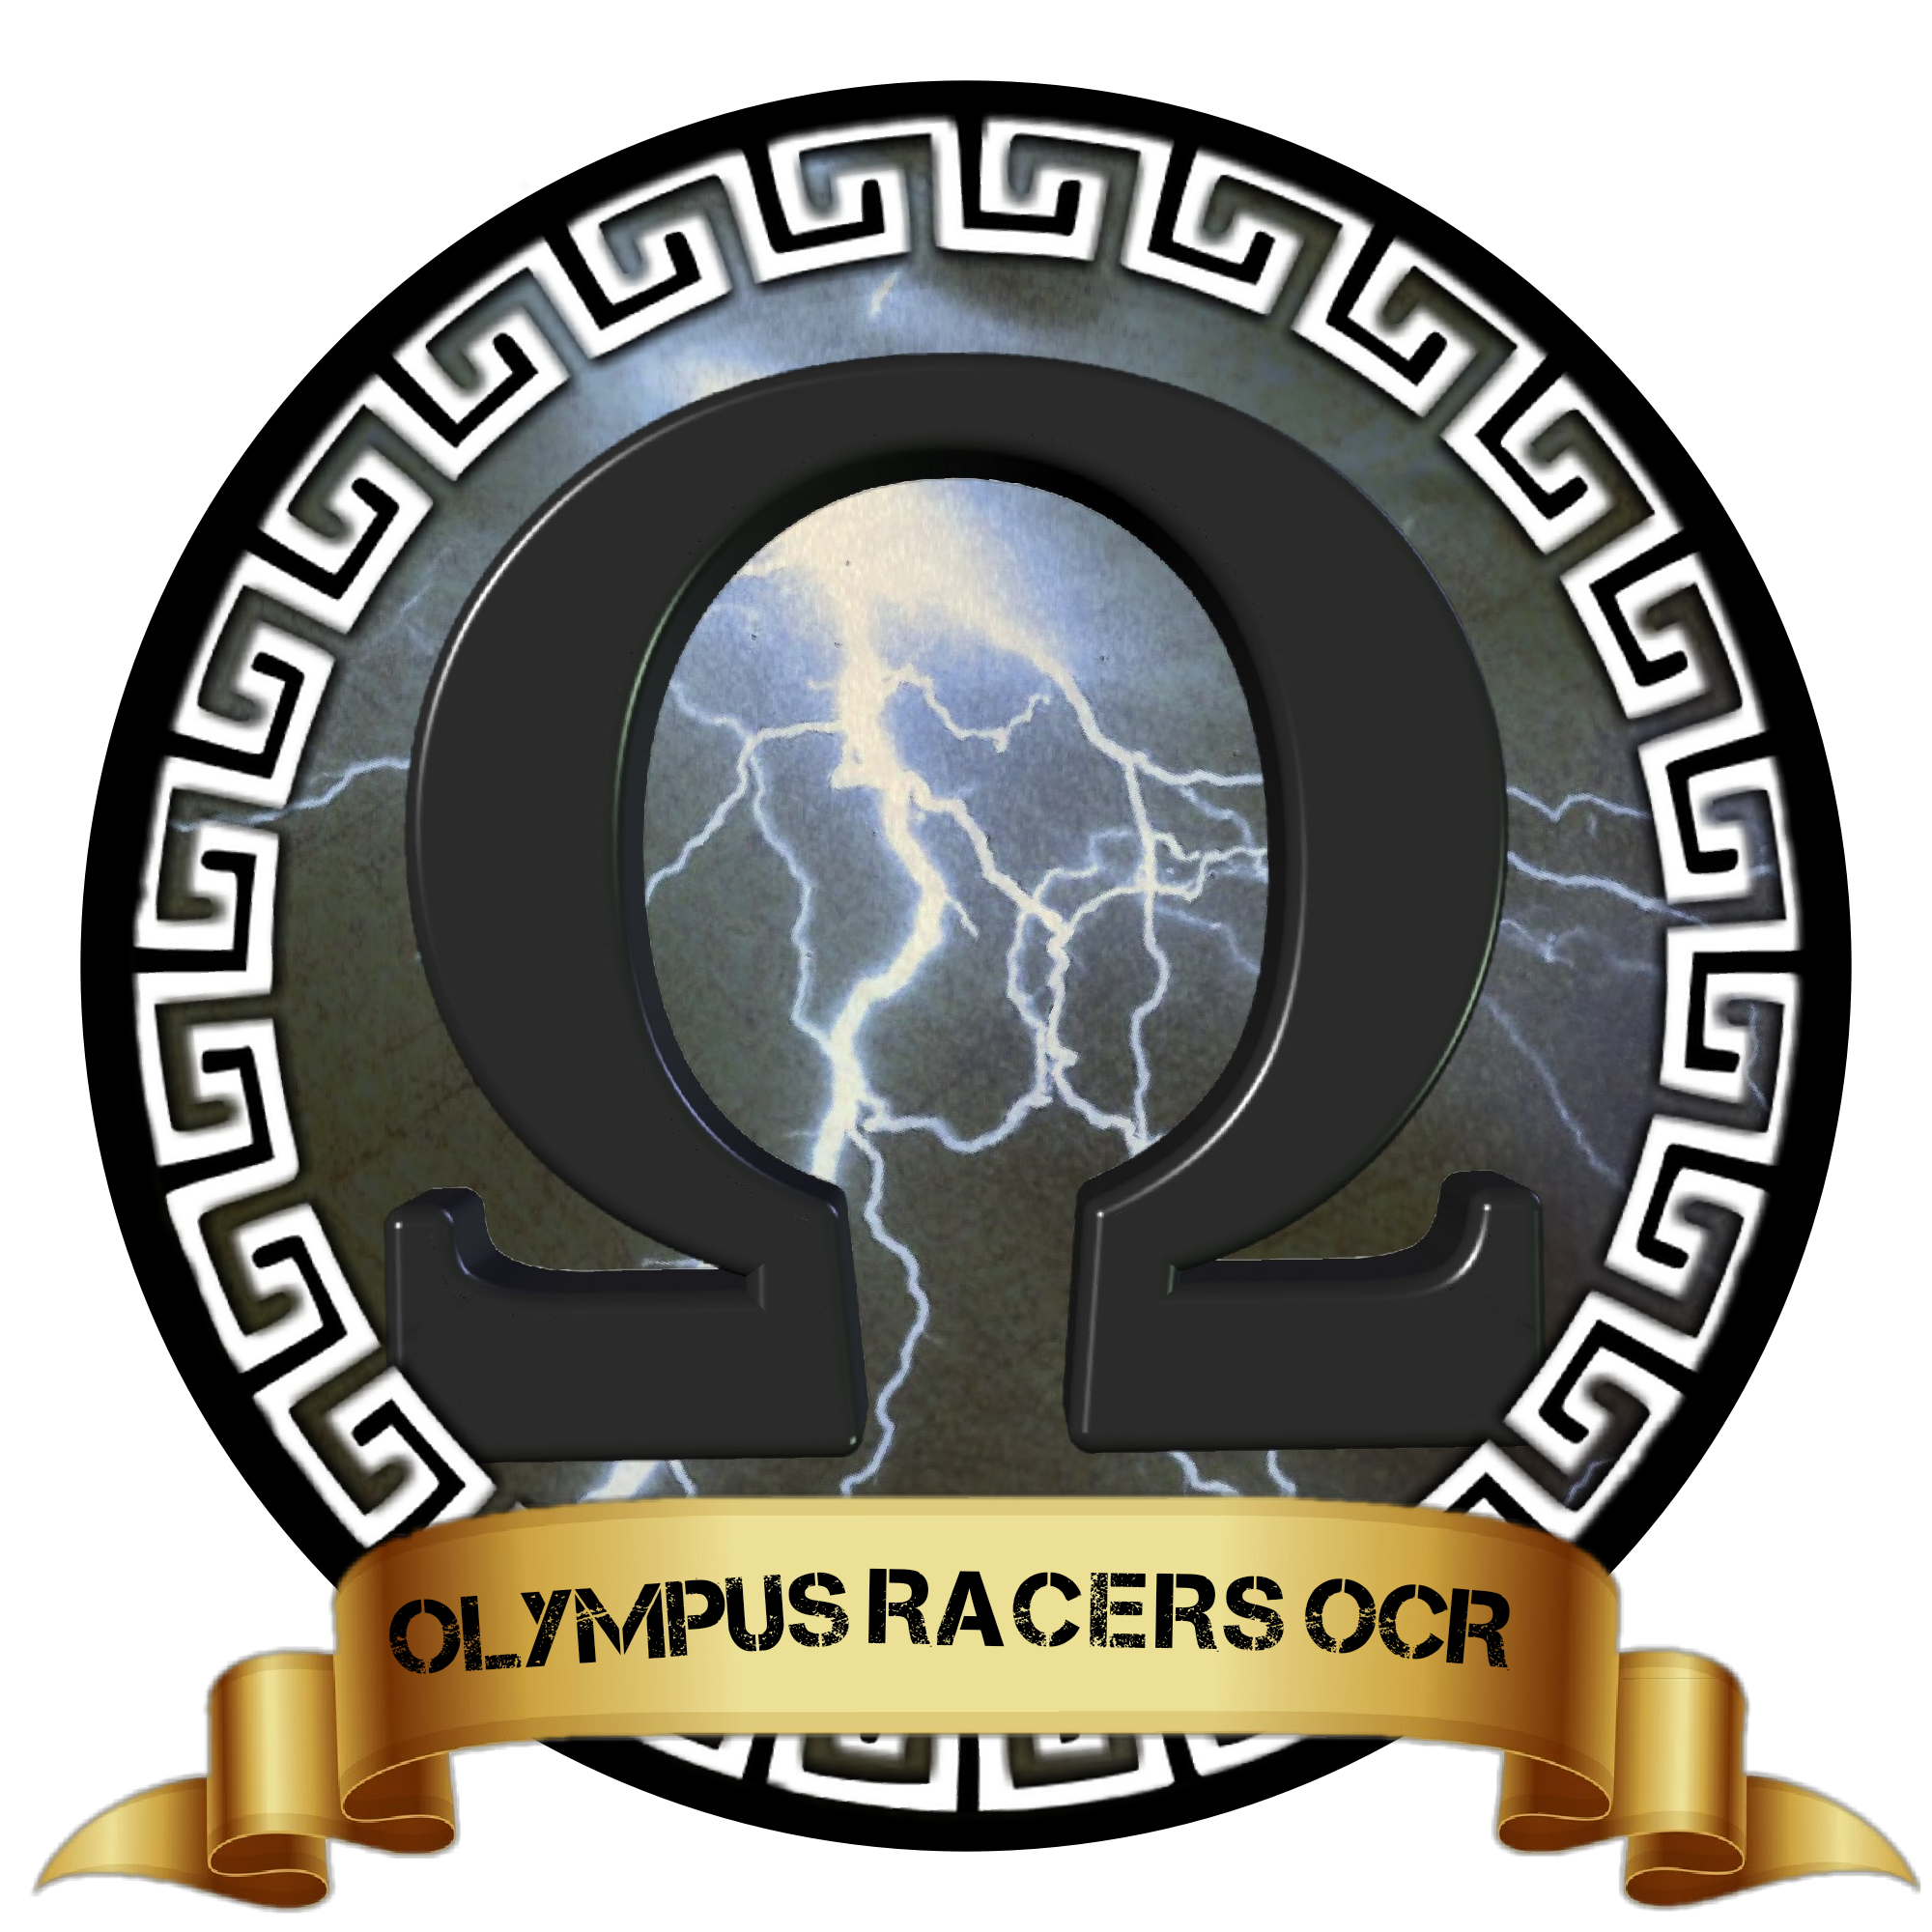 Olympus Racers OCR